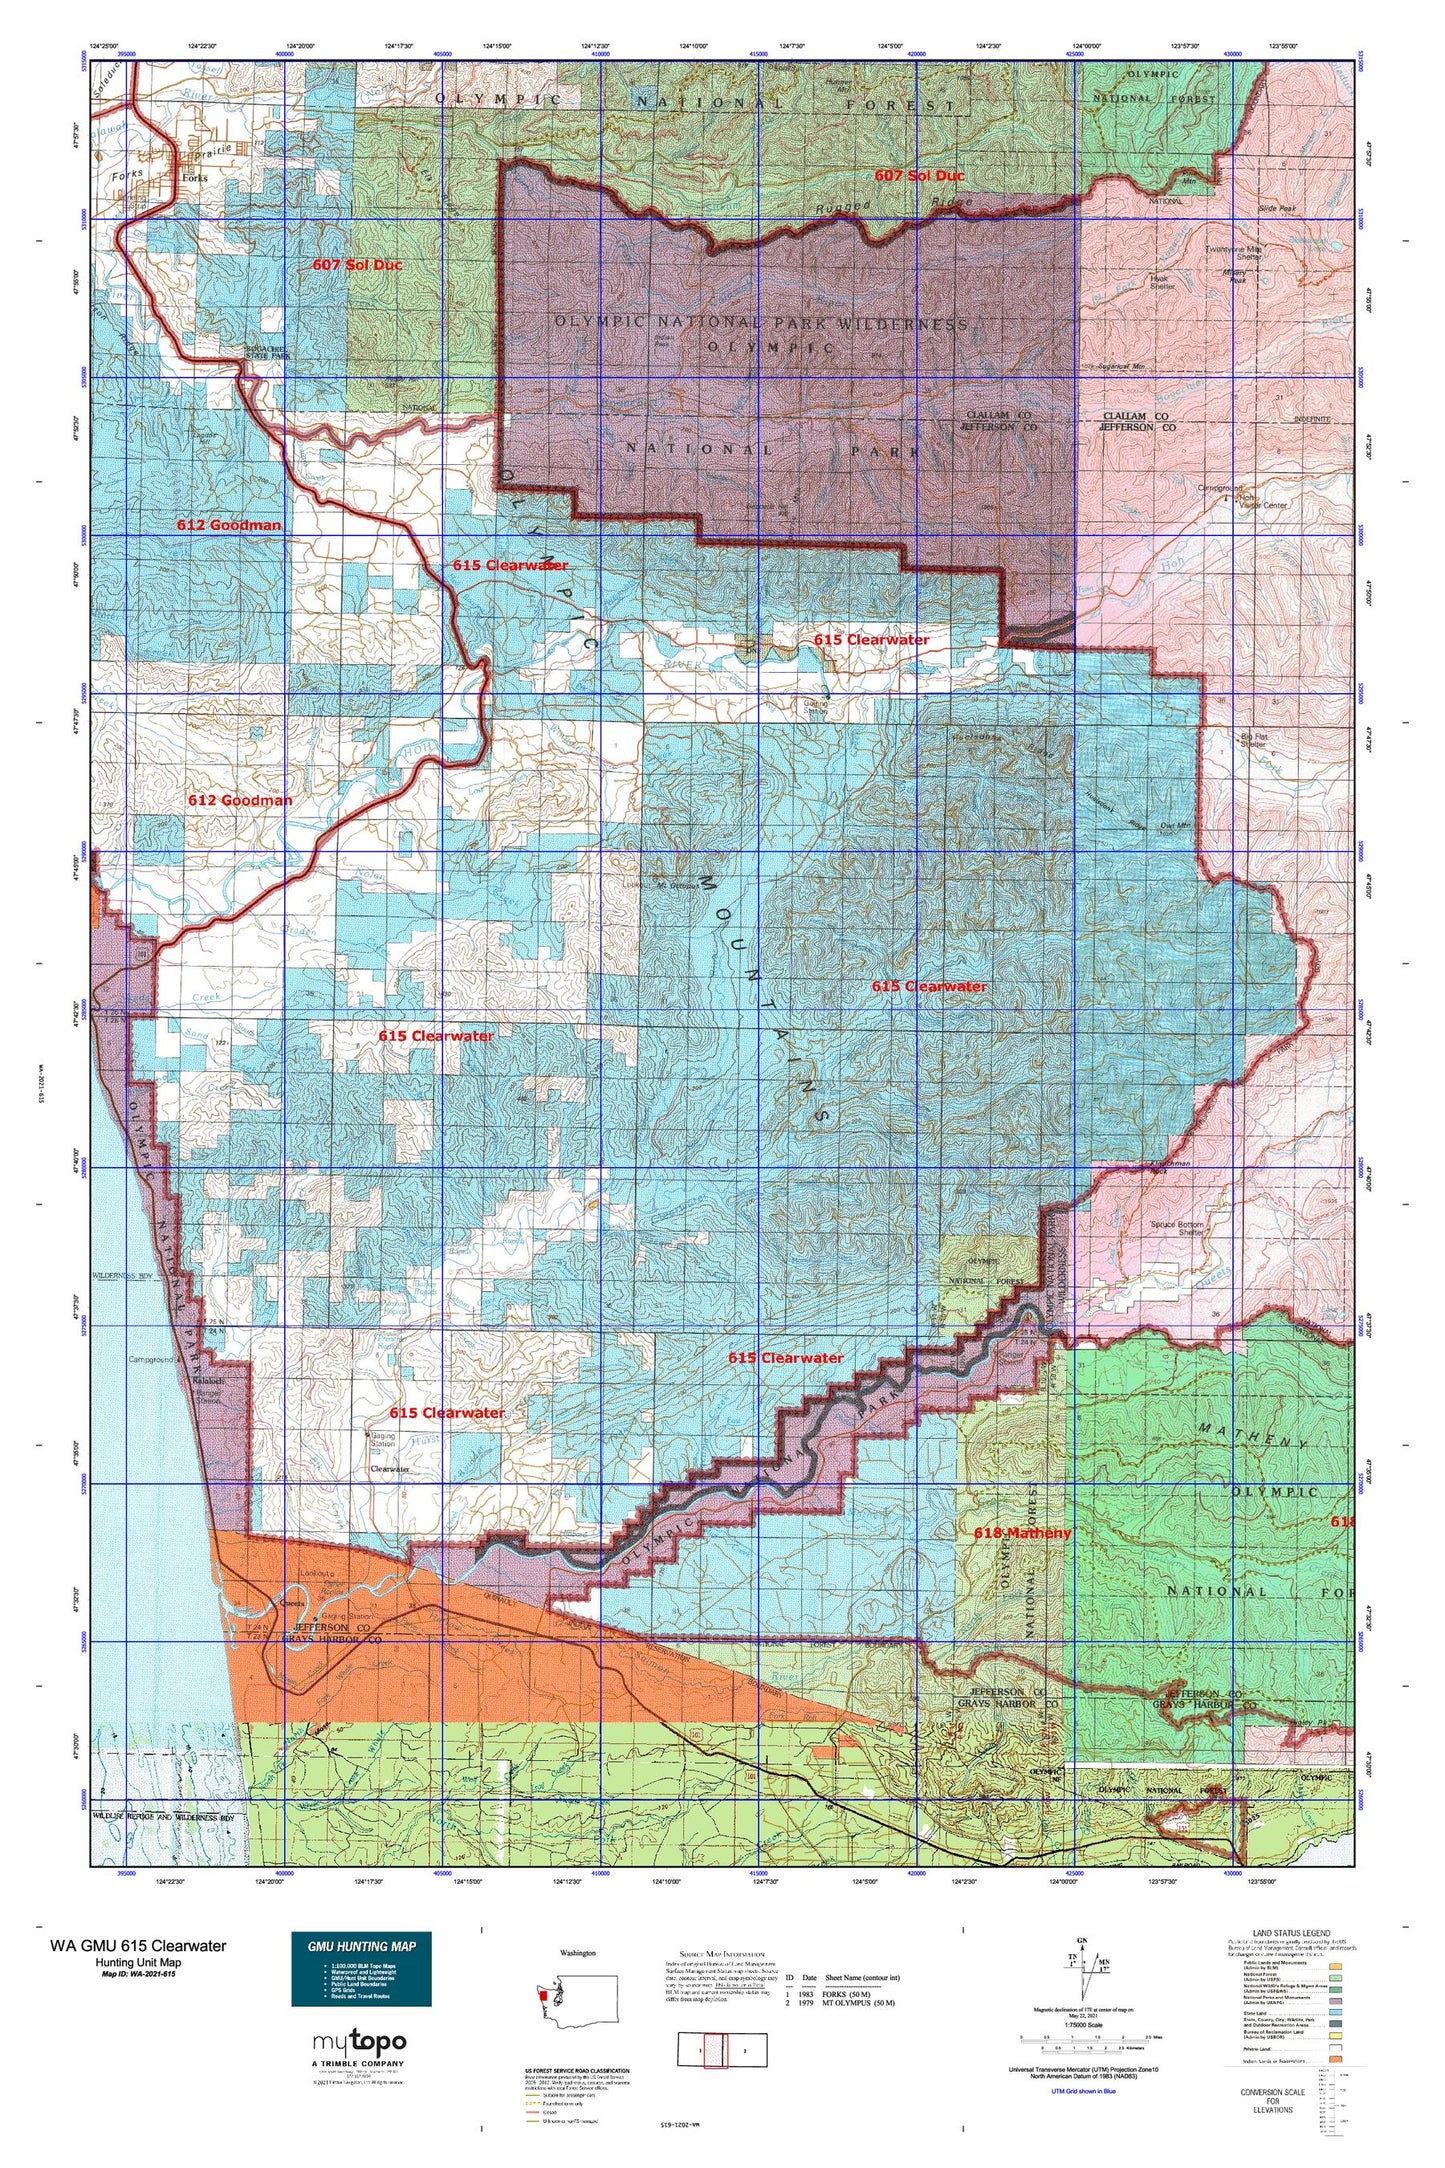 Washington GMU 615 Clearwater Map Image